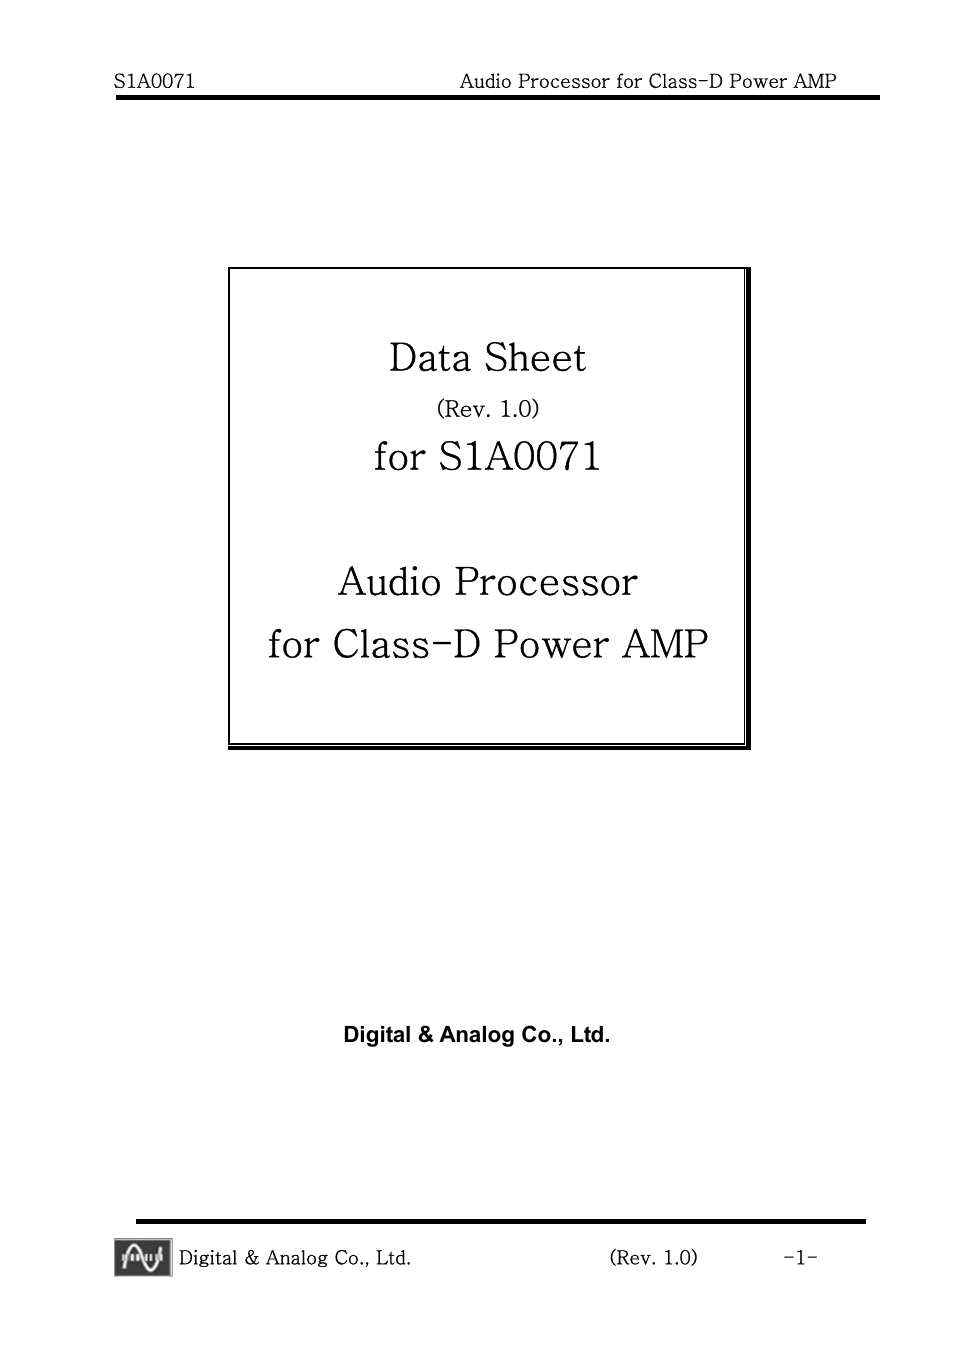 S1A0071 - Audio Processor for Class-D Power AMP